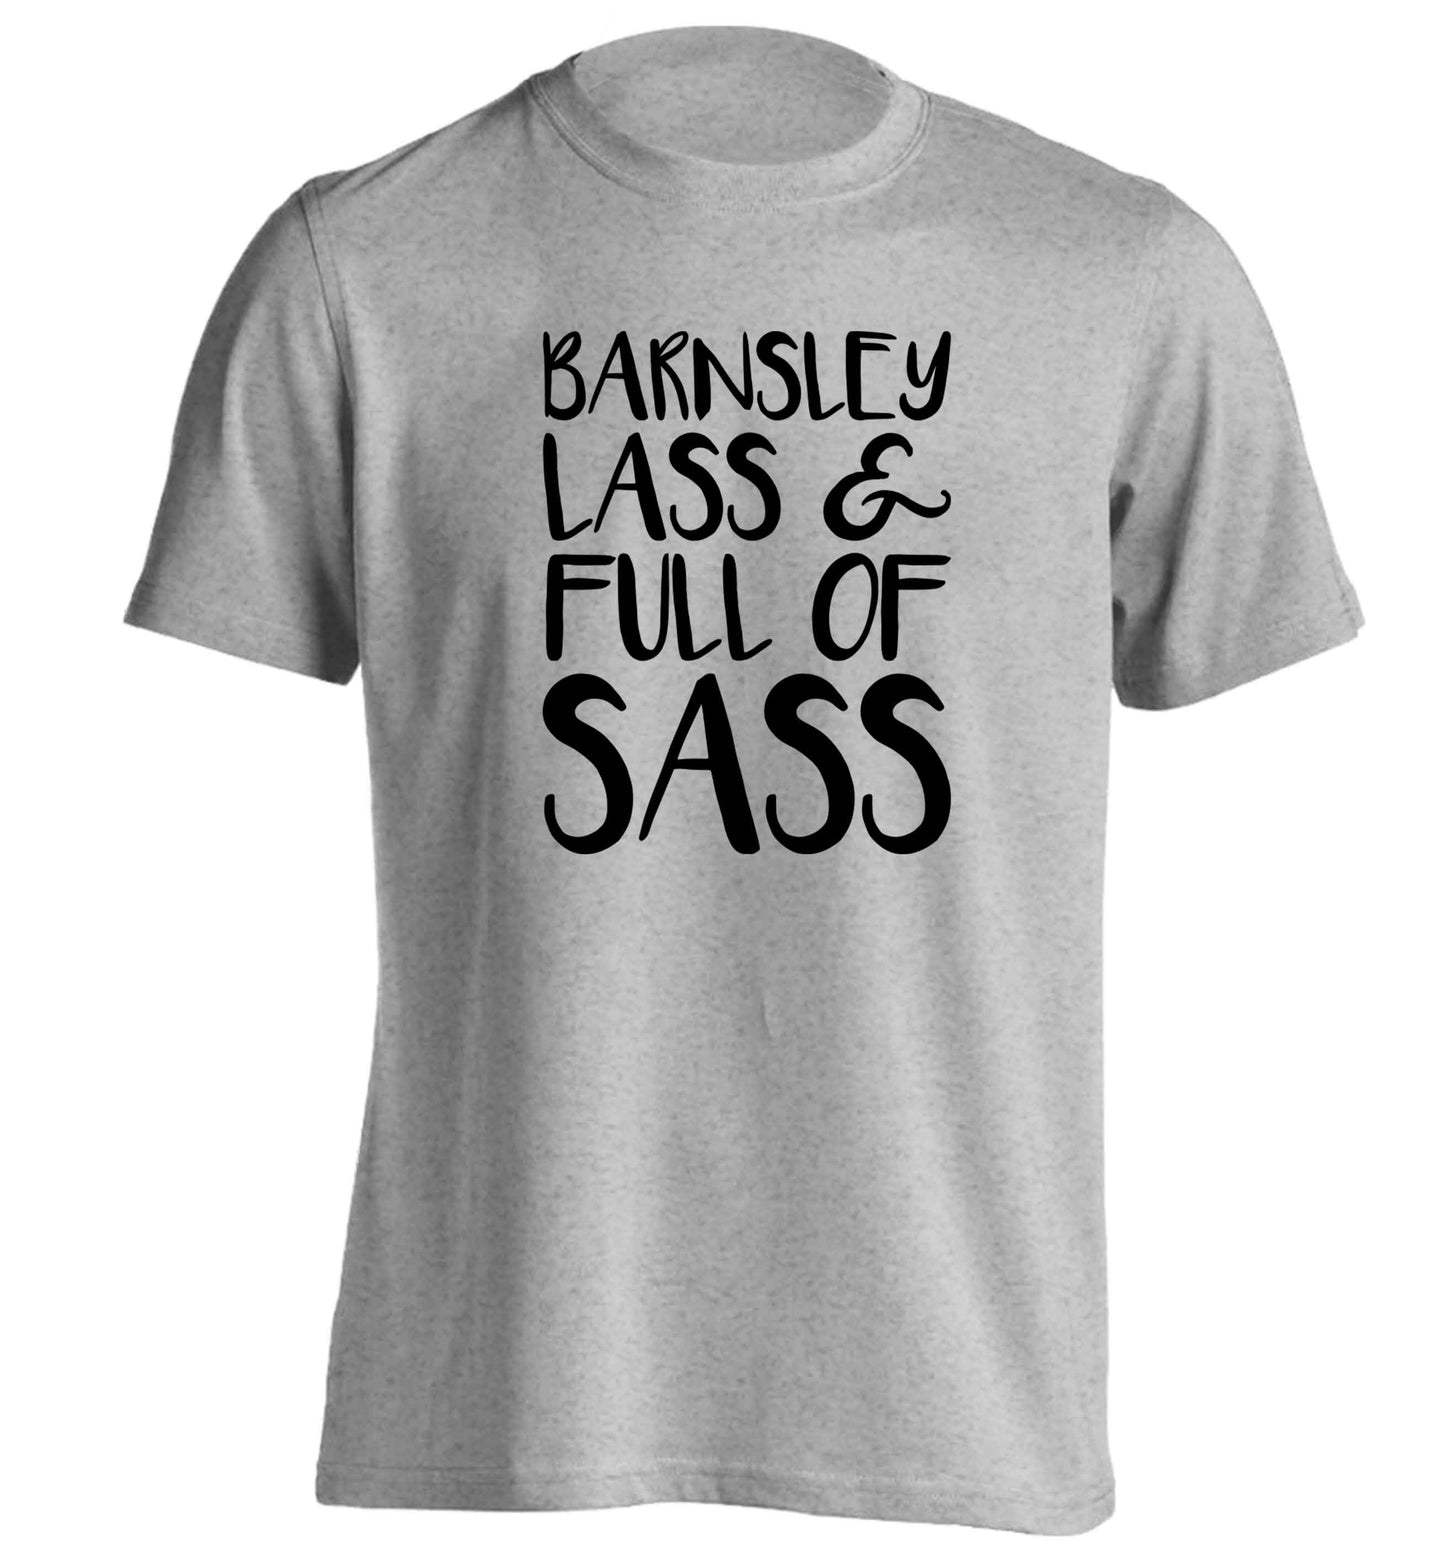 Barnsley lass and full of sass adults unisex grey Tshirt 2XL